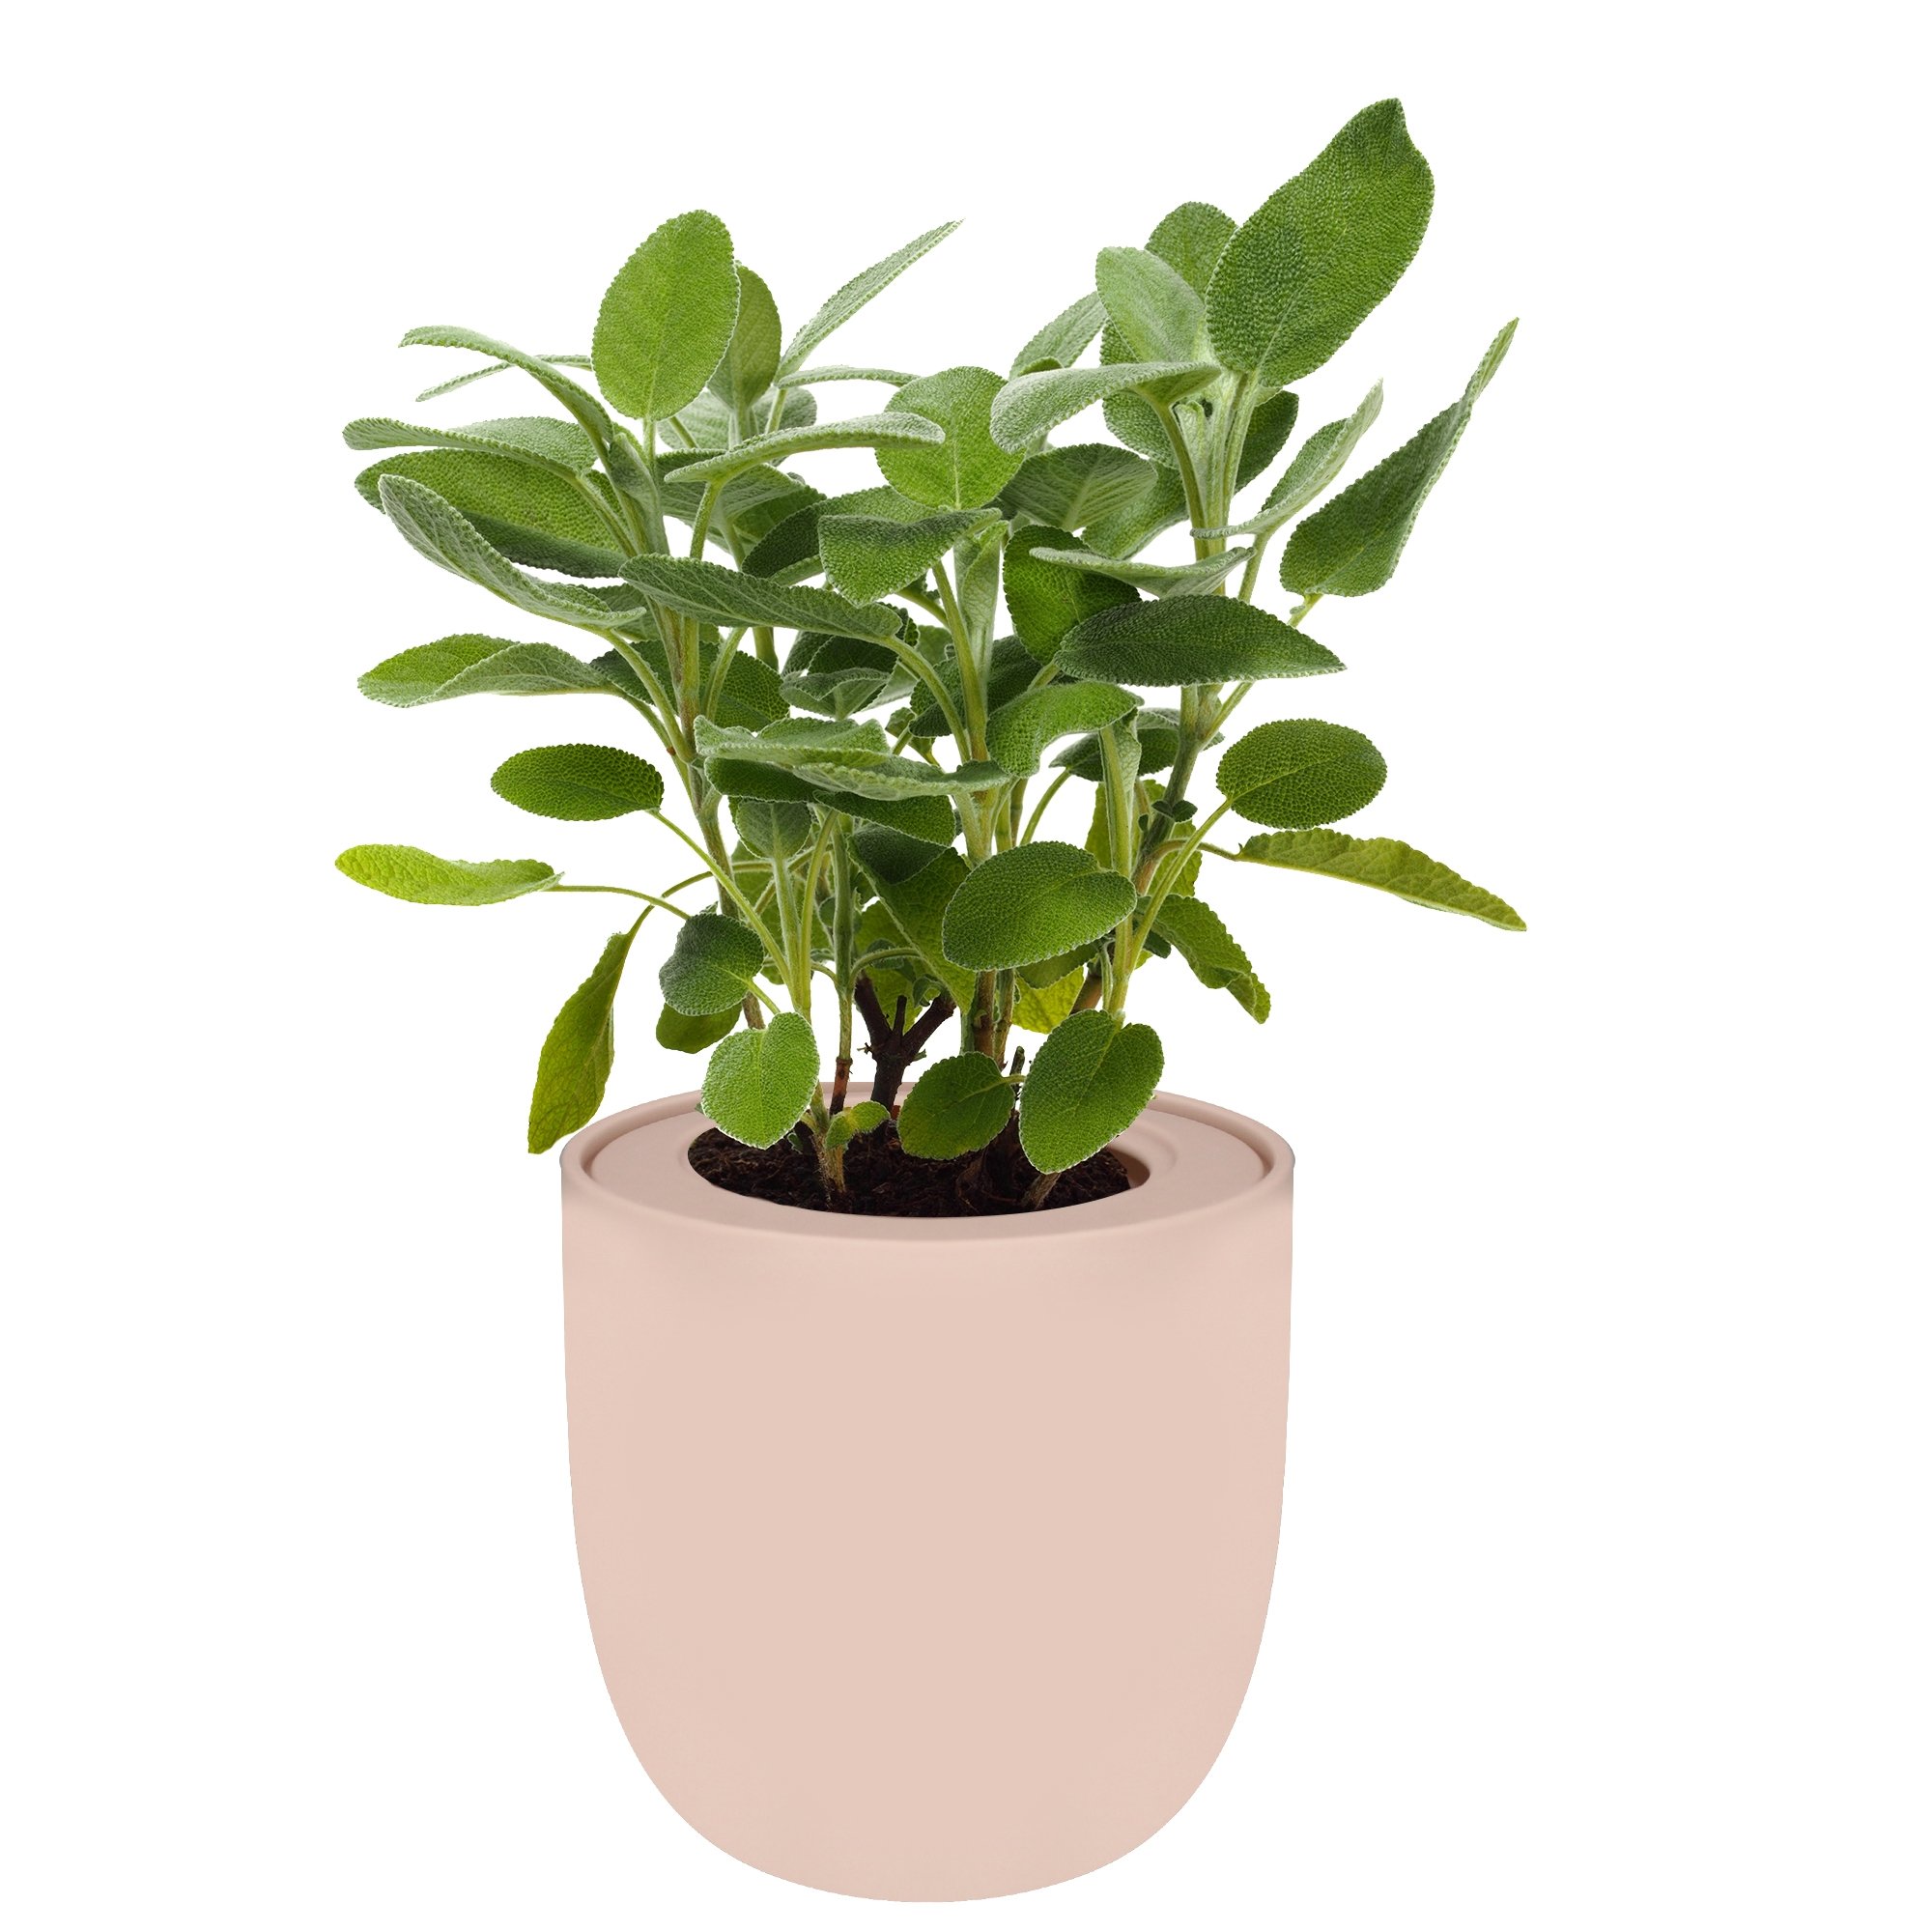 Sage Pink Ceramic Pot Hydroponic Growing Kit with Organic Seeds